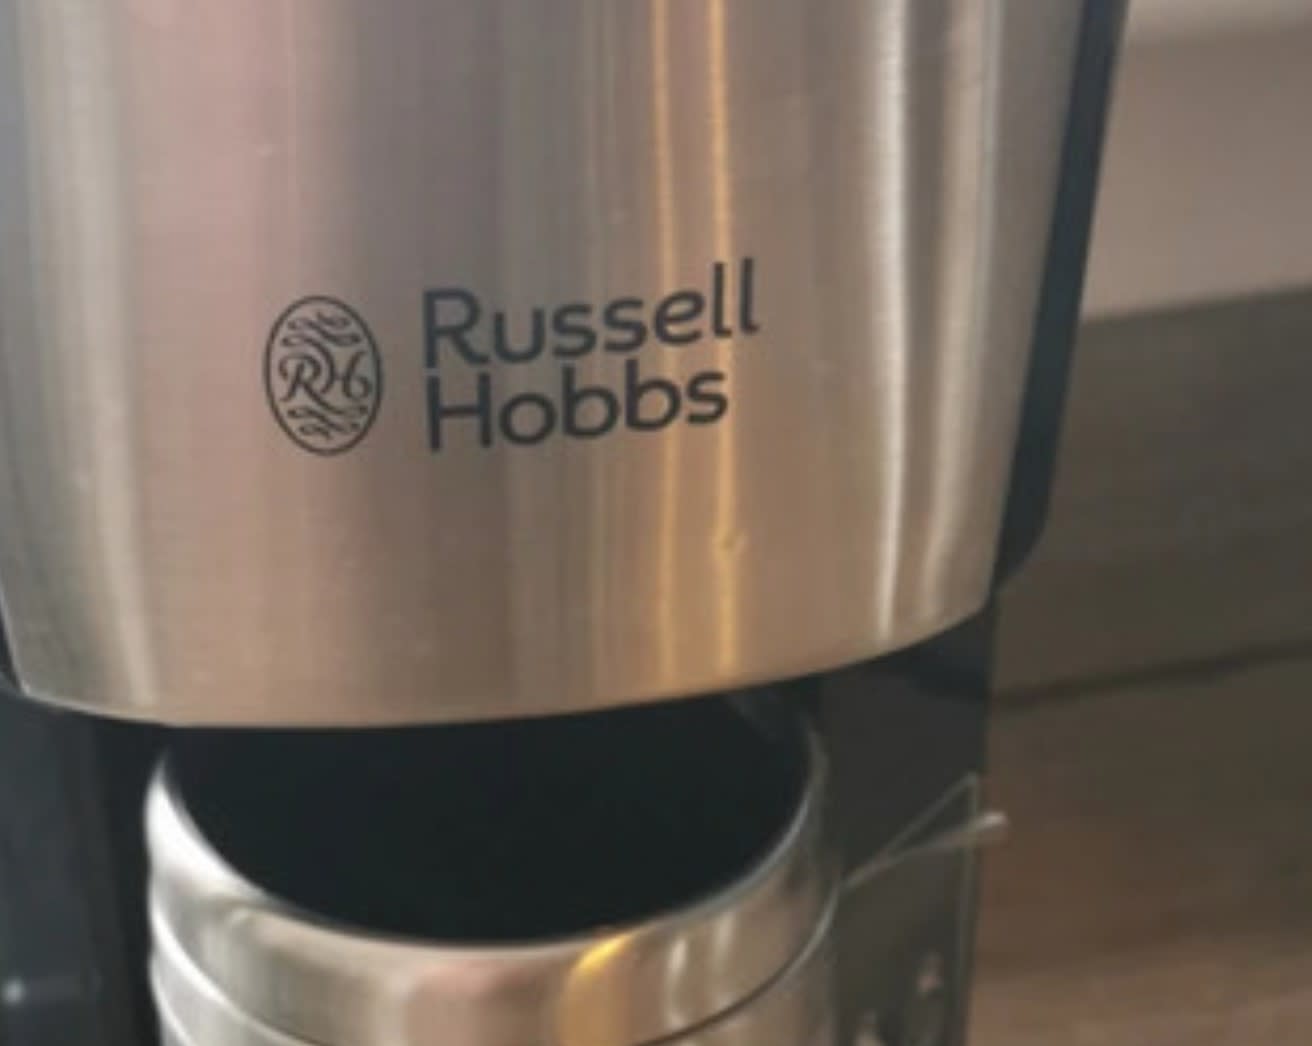 Russell Hobbs logo on coffee machine